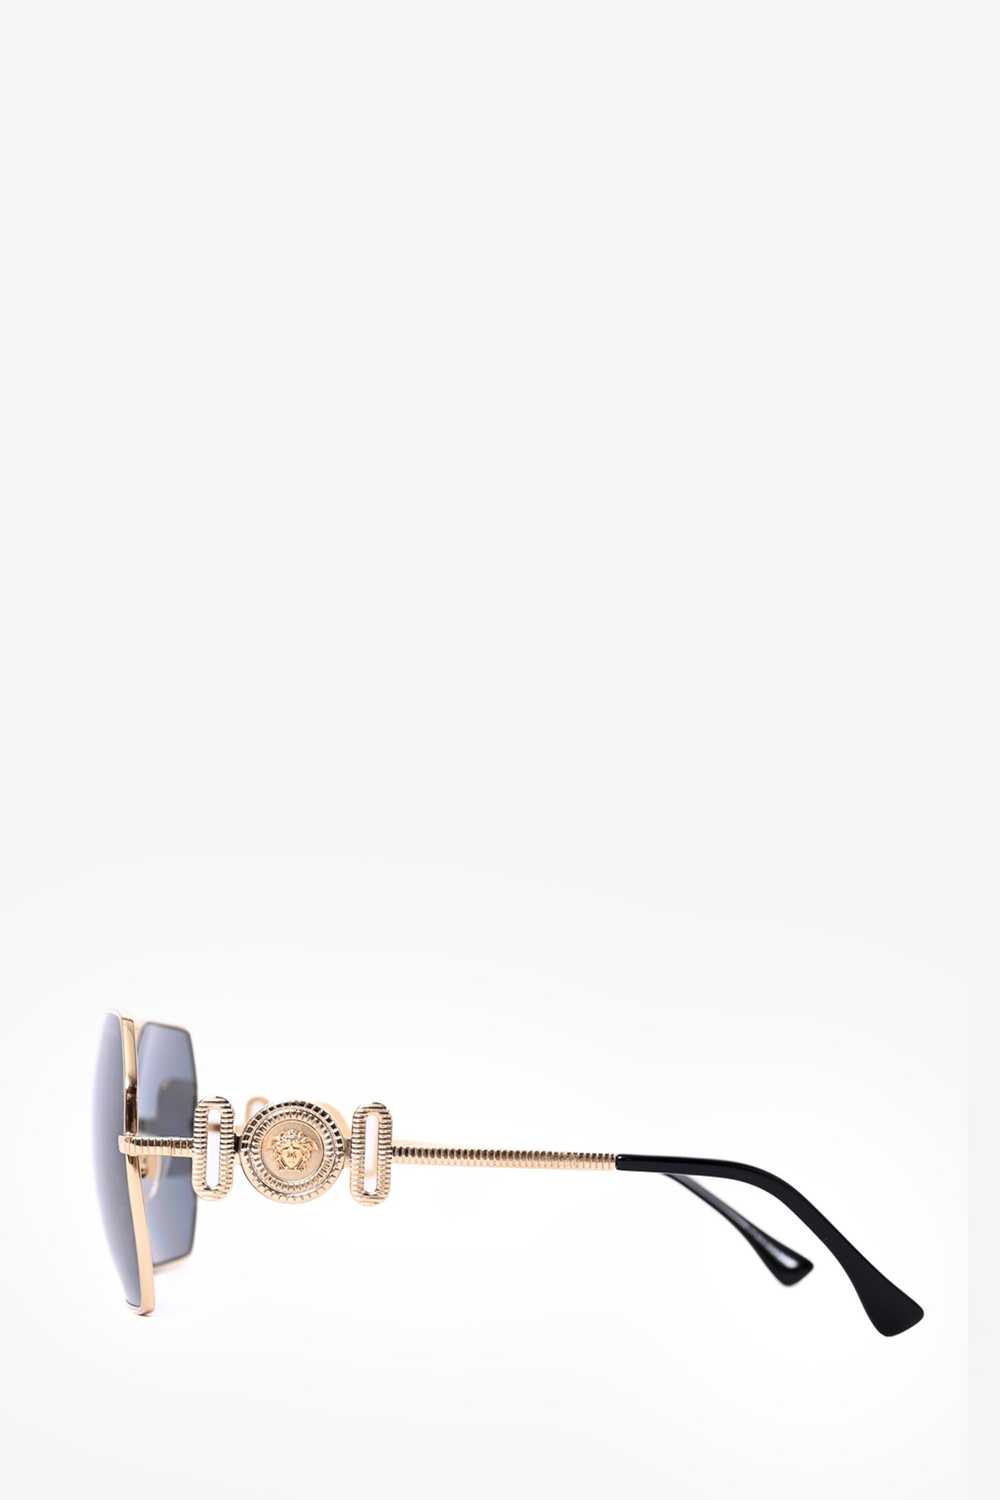 Versace Gold Medusa Tinted Sunglasses - image 3